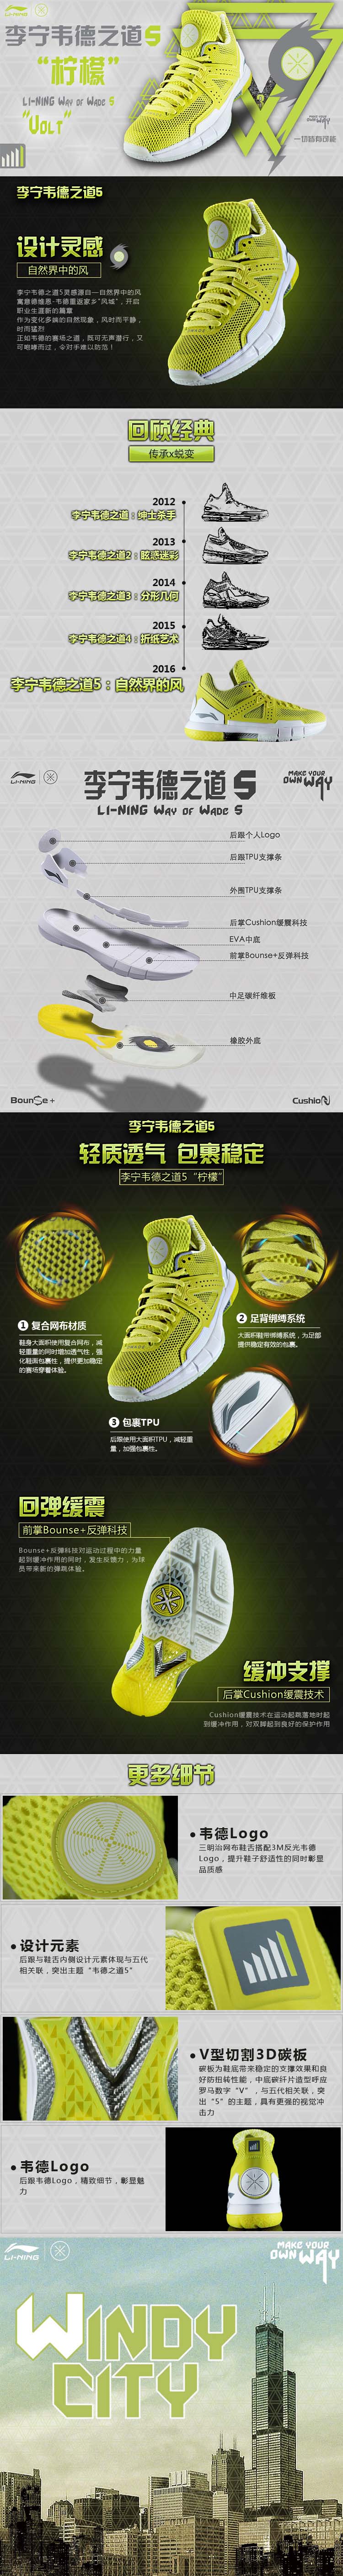 Li-Ning WoW4 Way of Wade 4 "City Pack" Premium Basketball Shoes 